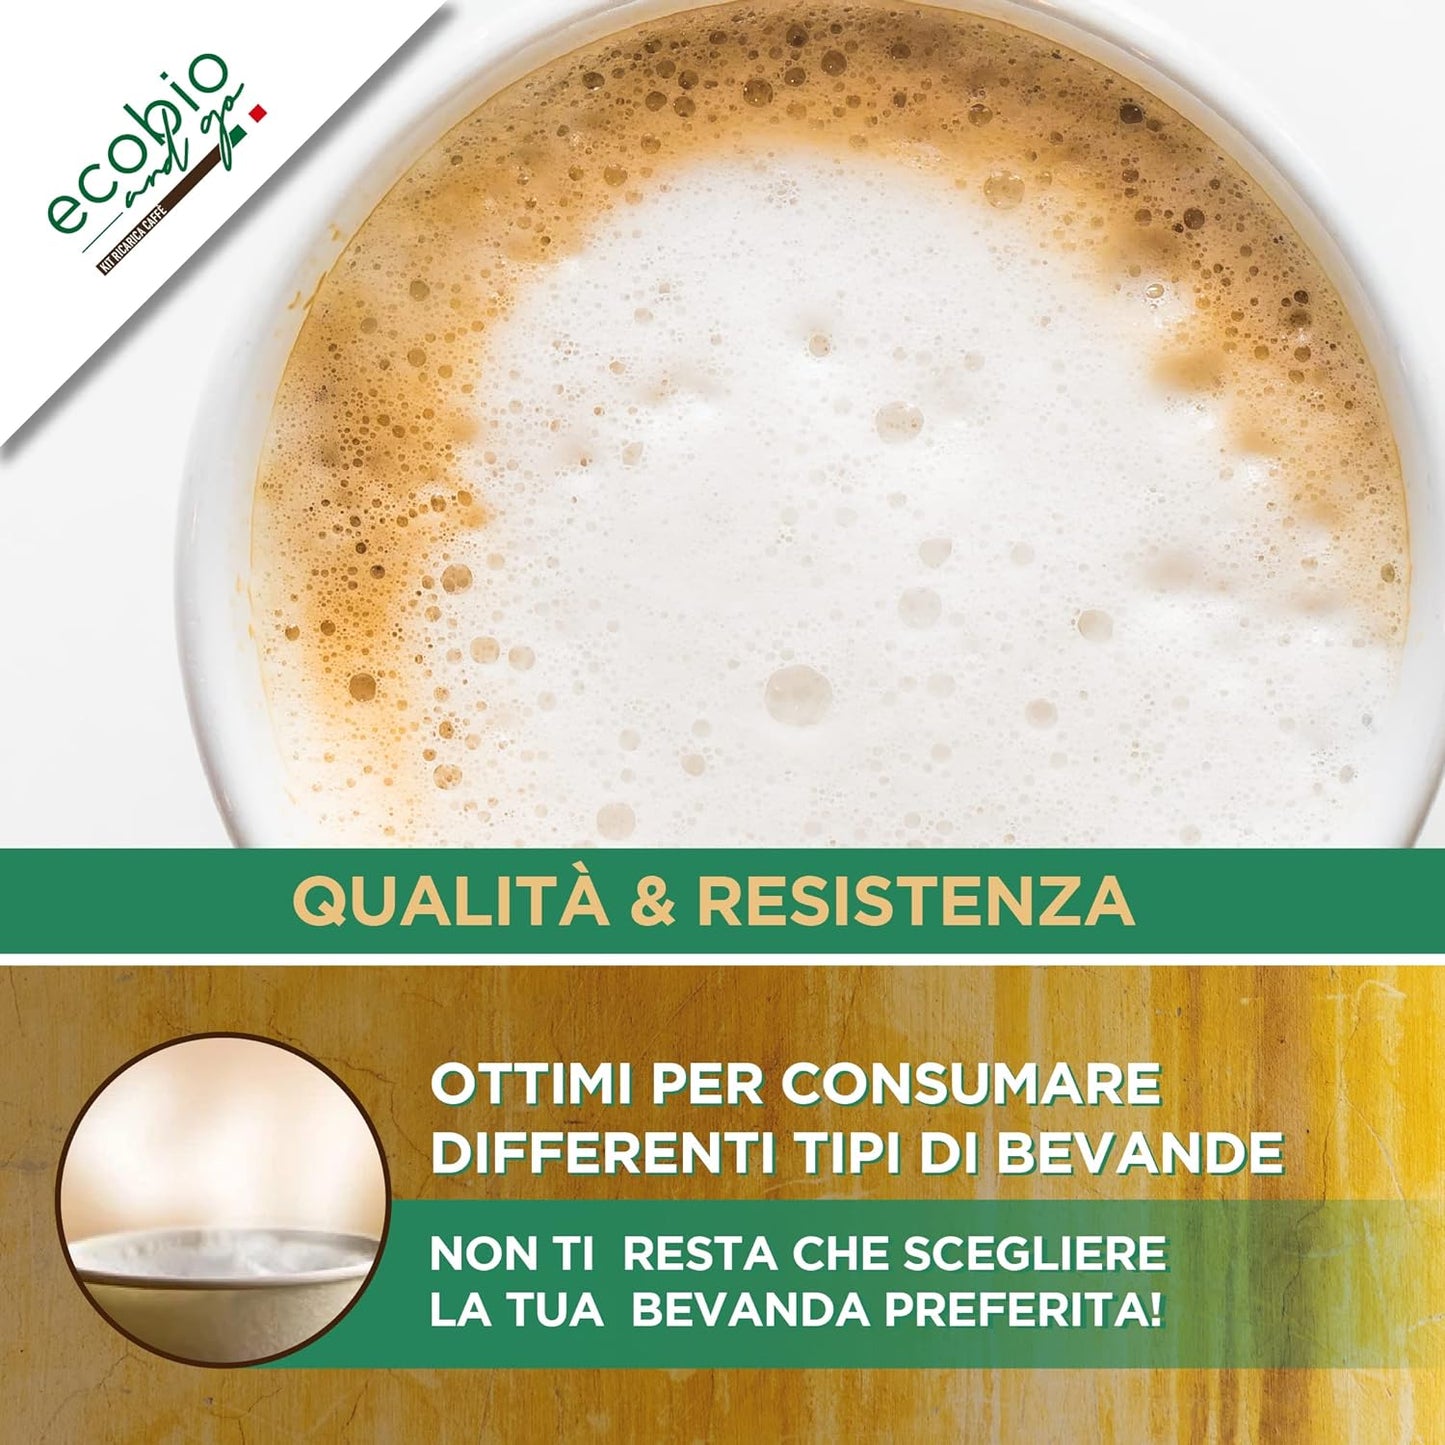 ECOBIO and GO Bicchierini Caffè in Carta 1000 Pezzi, Bicchieri Caffe Monouso Biodegradabili 75 ml, Tazzine caffè usa e getta (SUMMER VIBES)